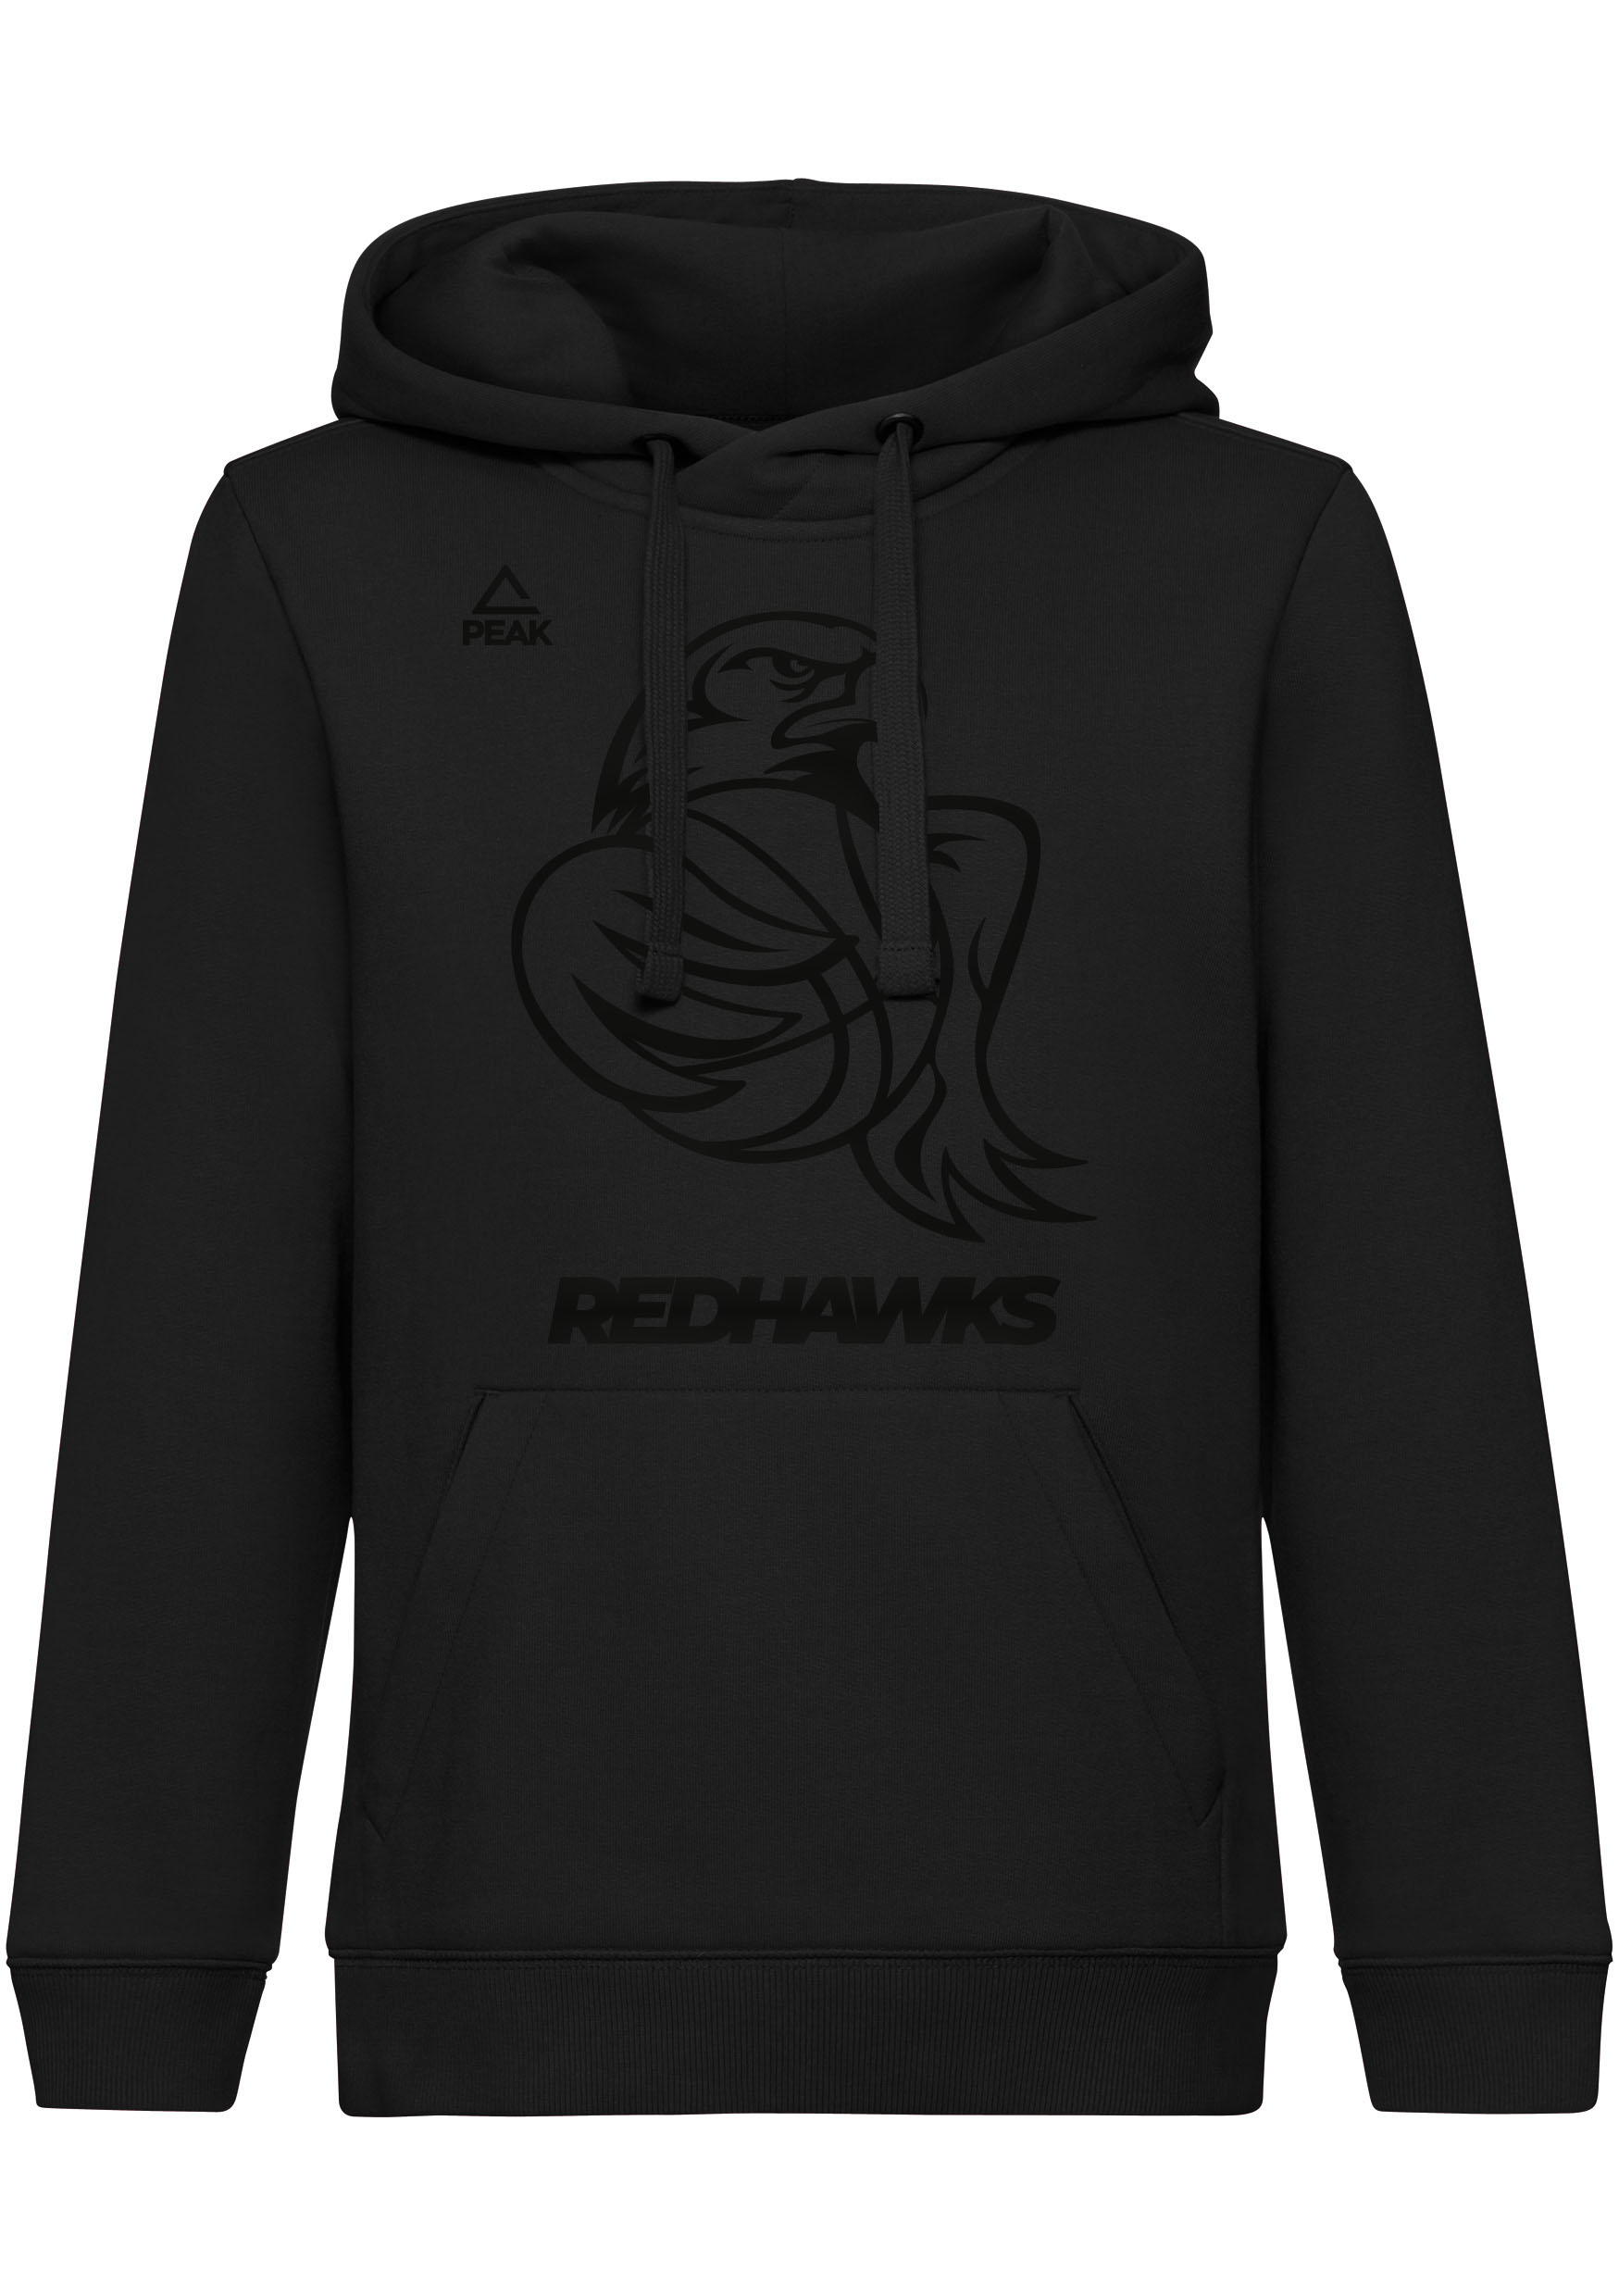 Red Hawks Hoodie Color Edition schwarz schwarz